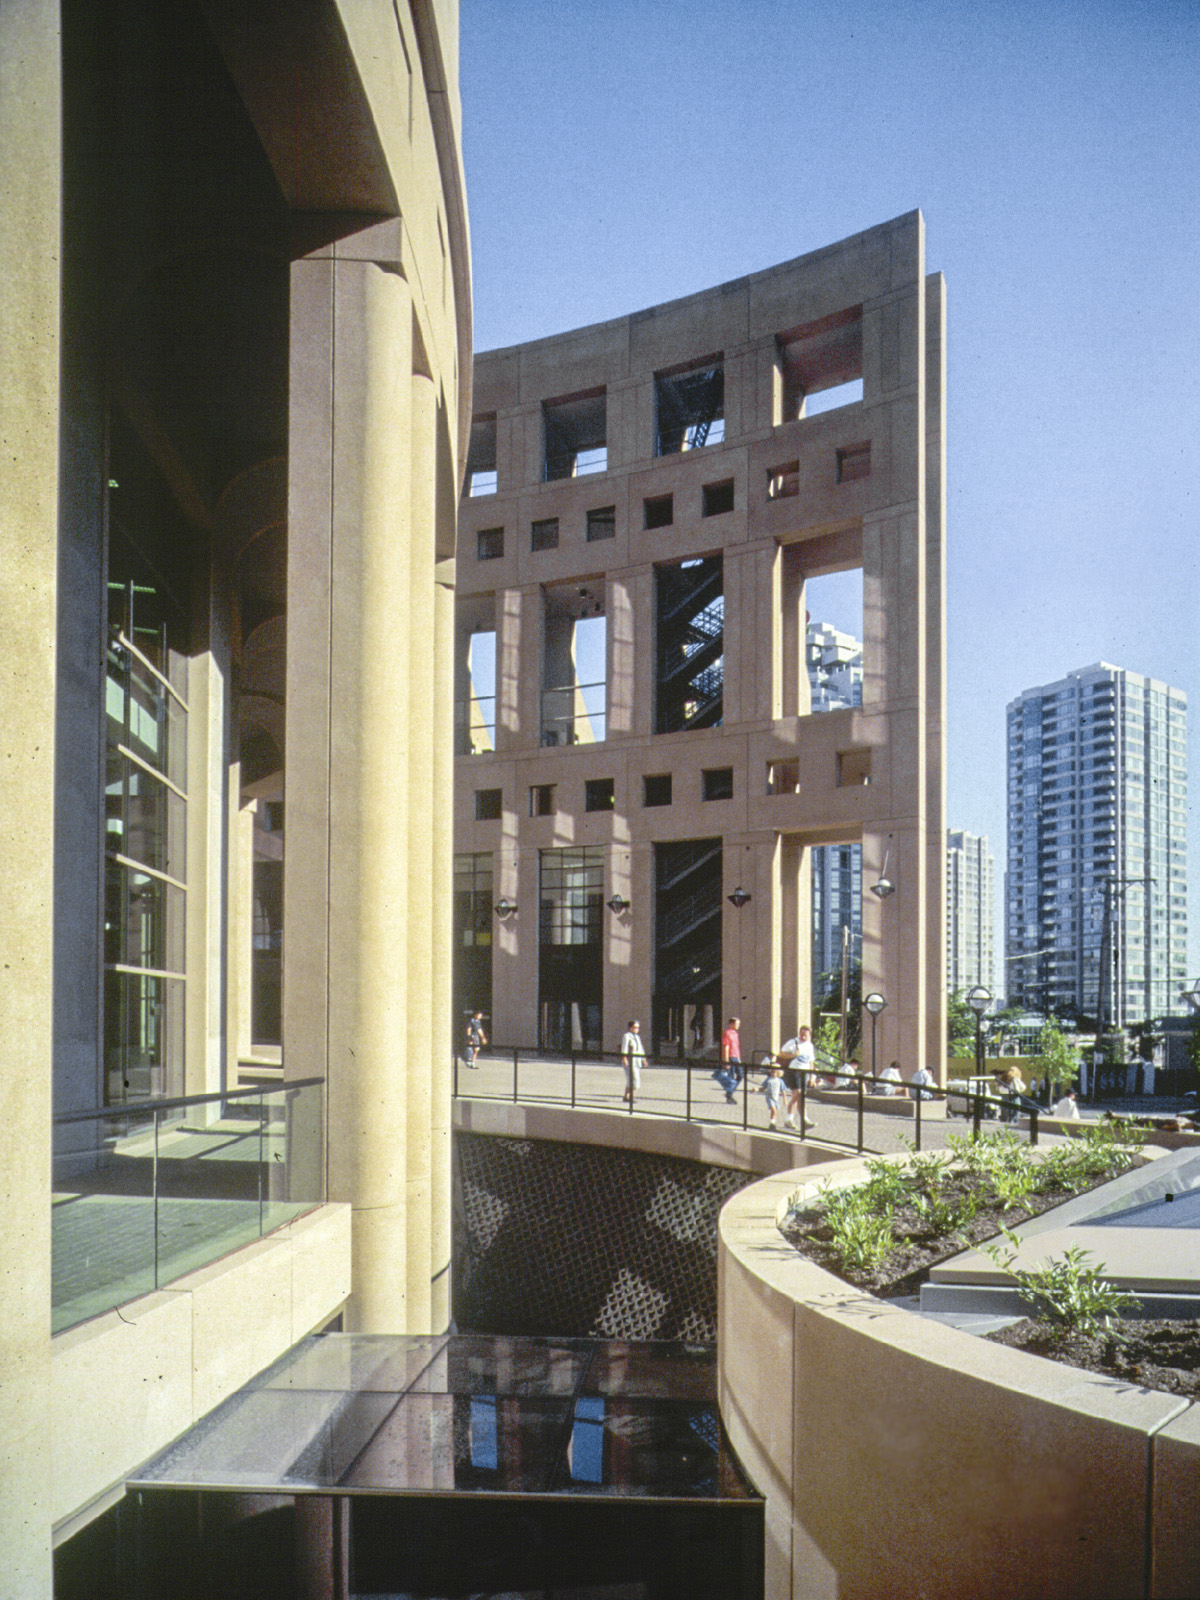 Vancouver Public Library